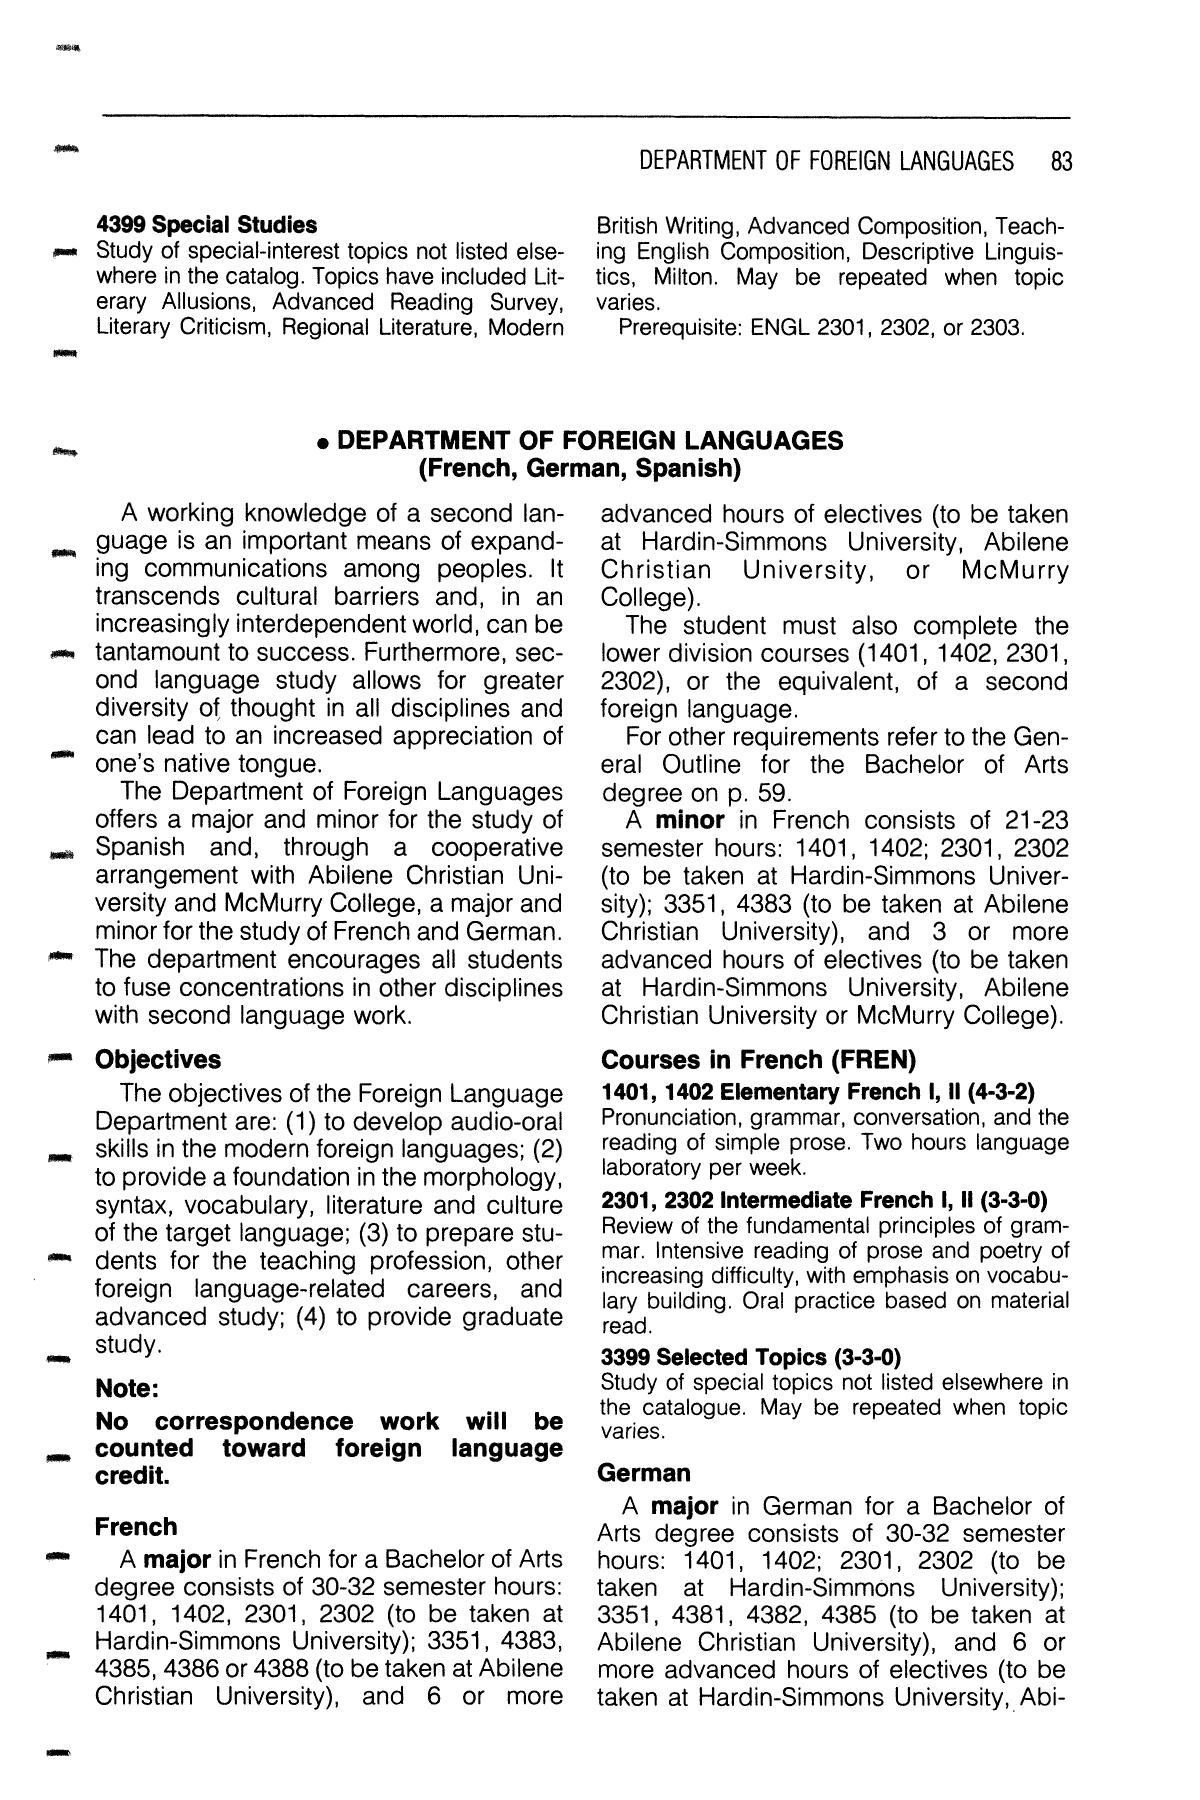 Catalog of Hardin-Simmons University, 1985-1986 Undergraduate Bulletin
                                                
                                                    83
                                                